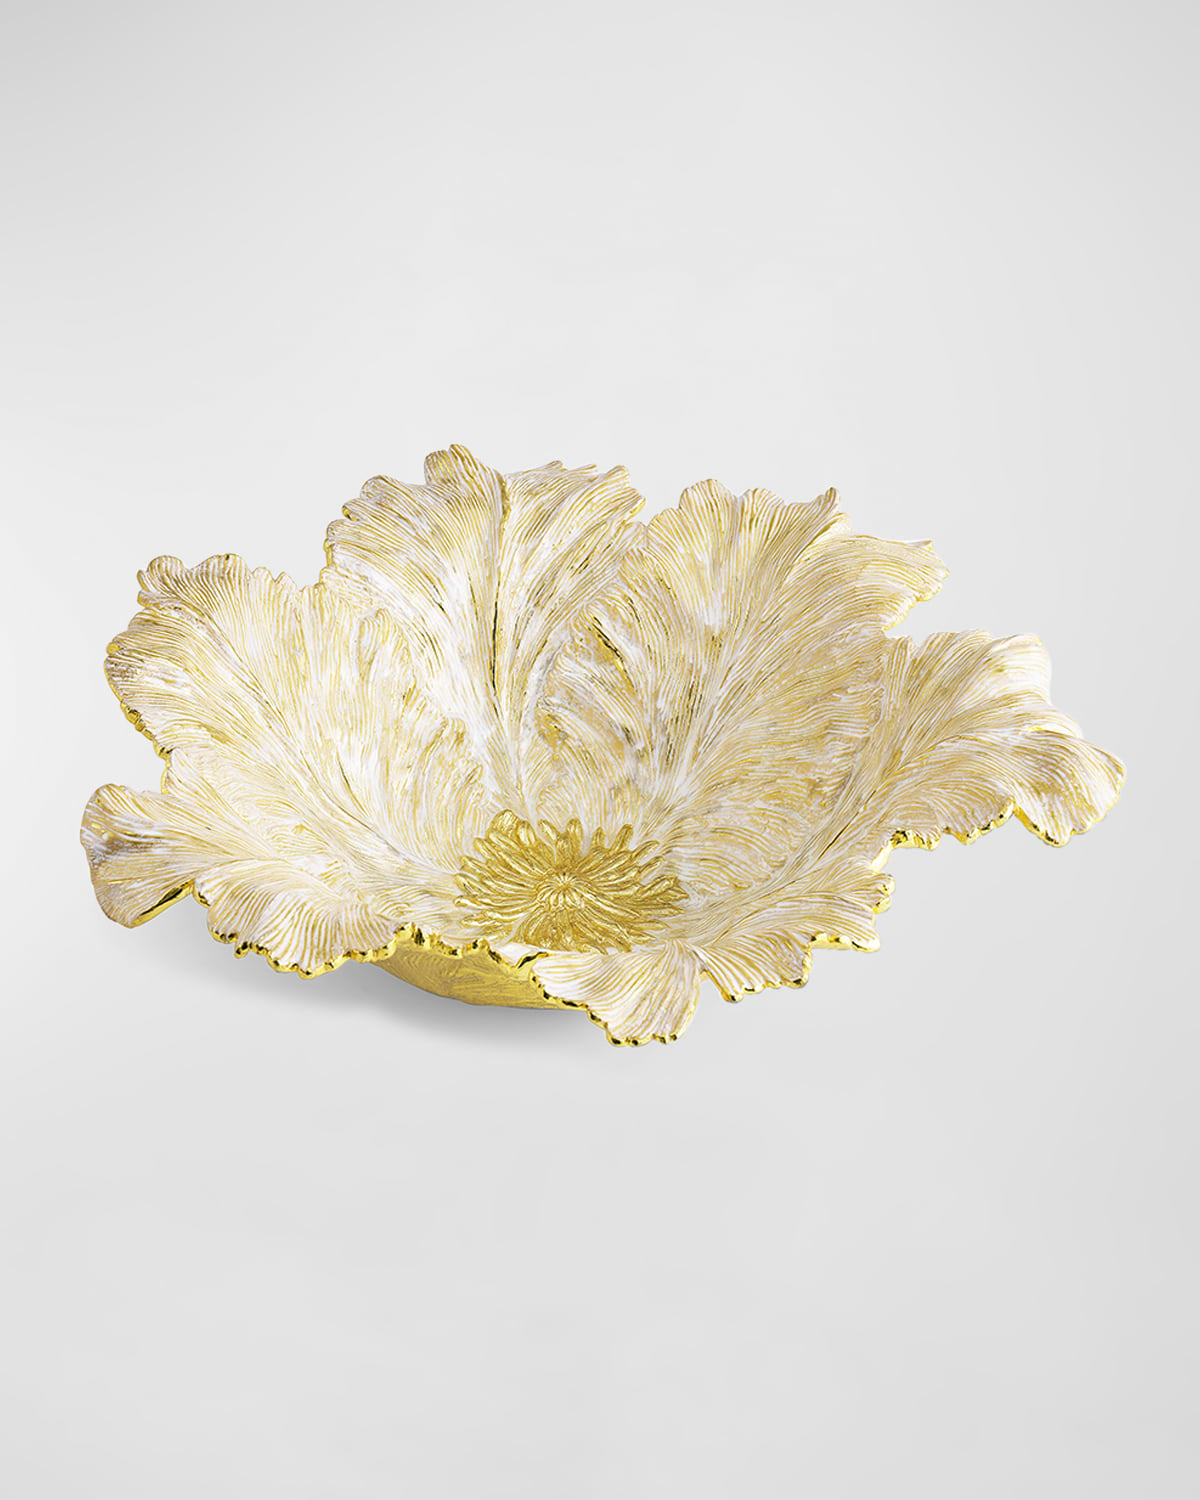 Michael Aram Tulip Centerpiece Bowl In Gold/white